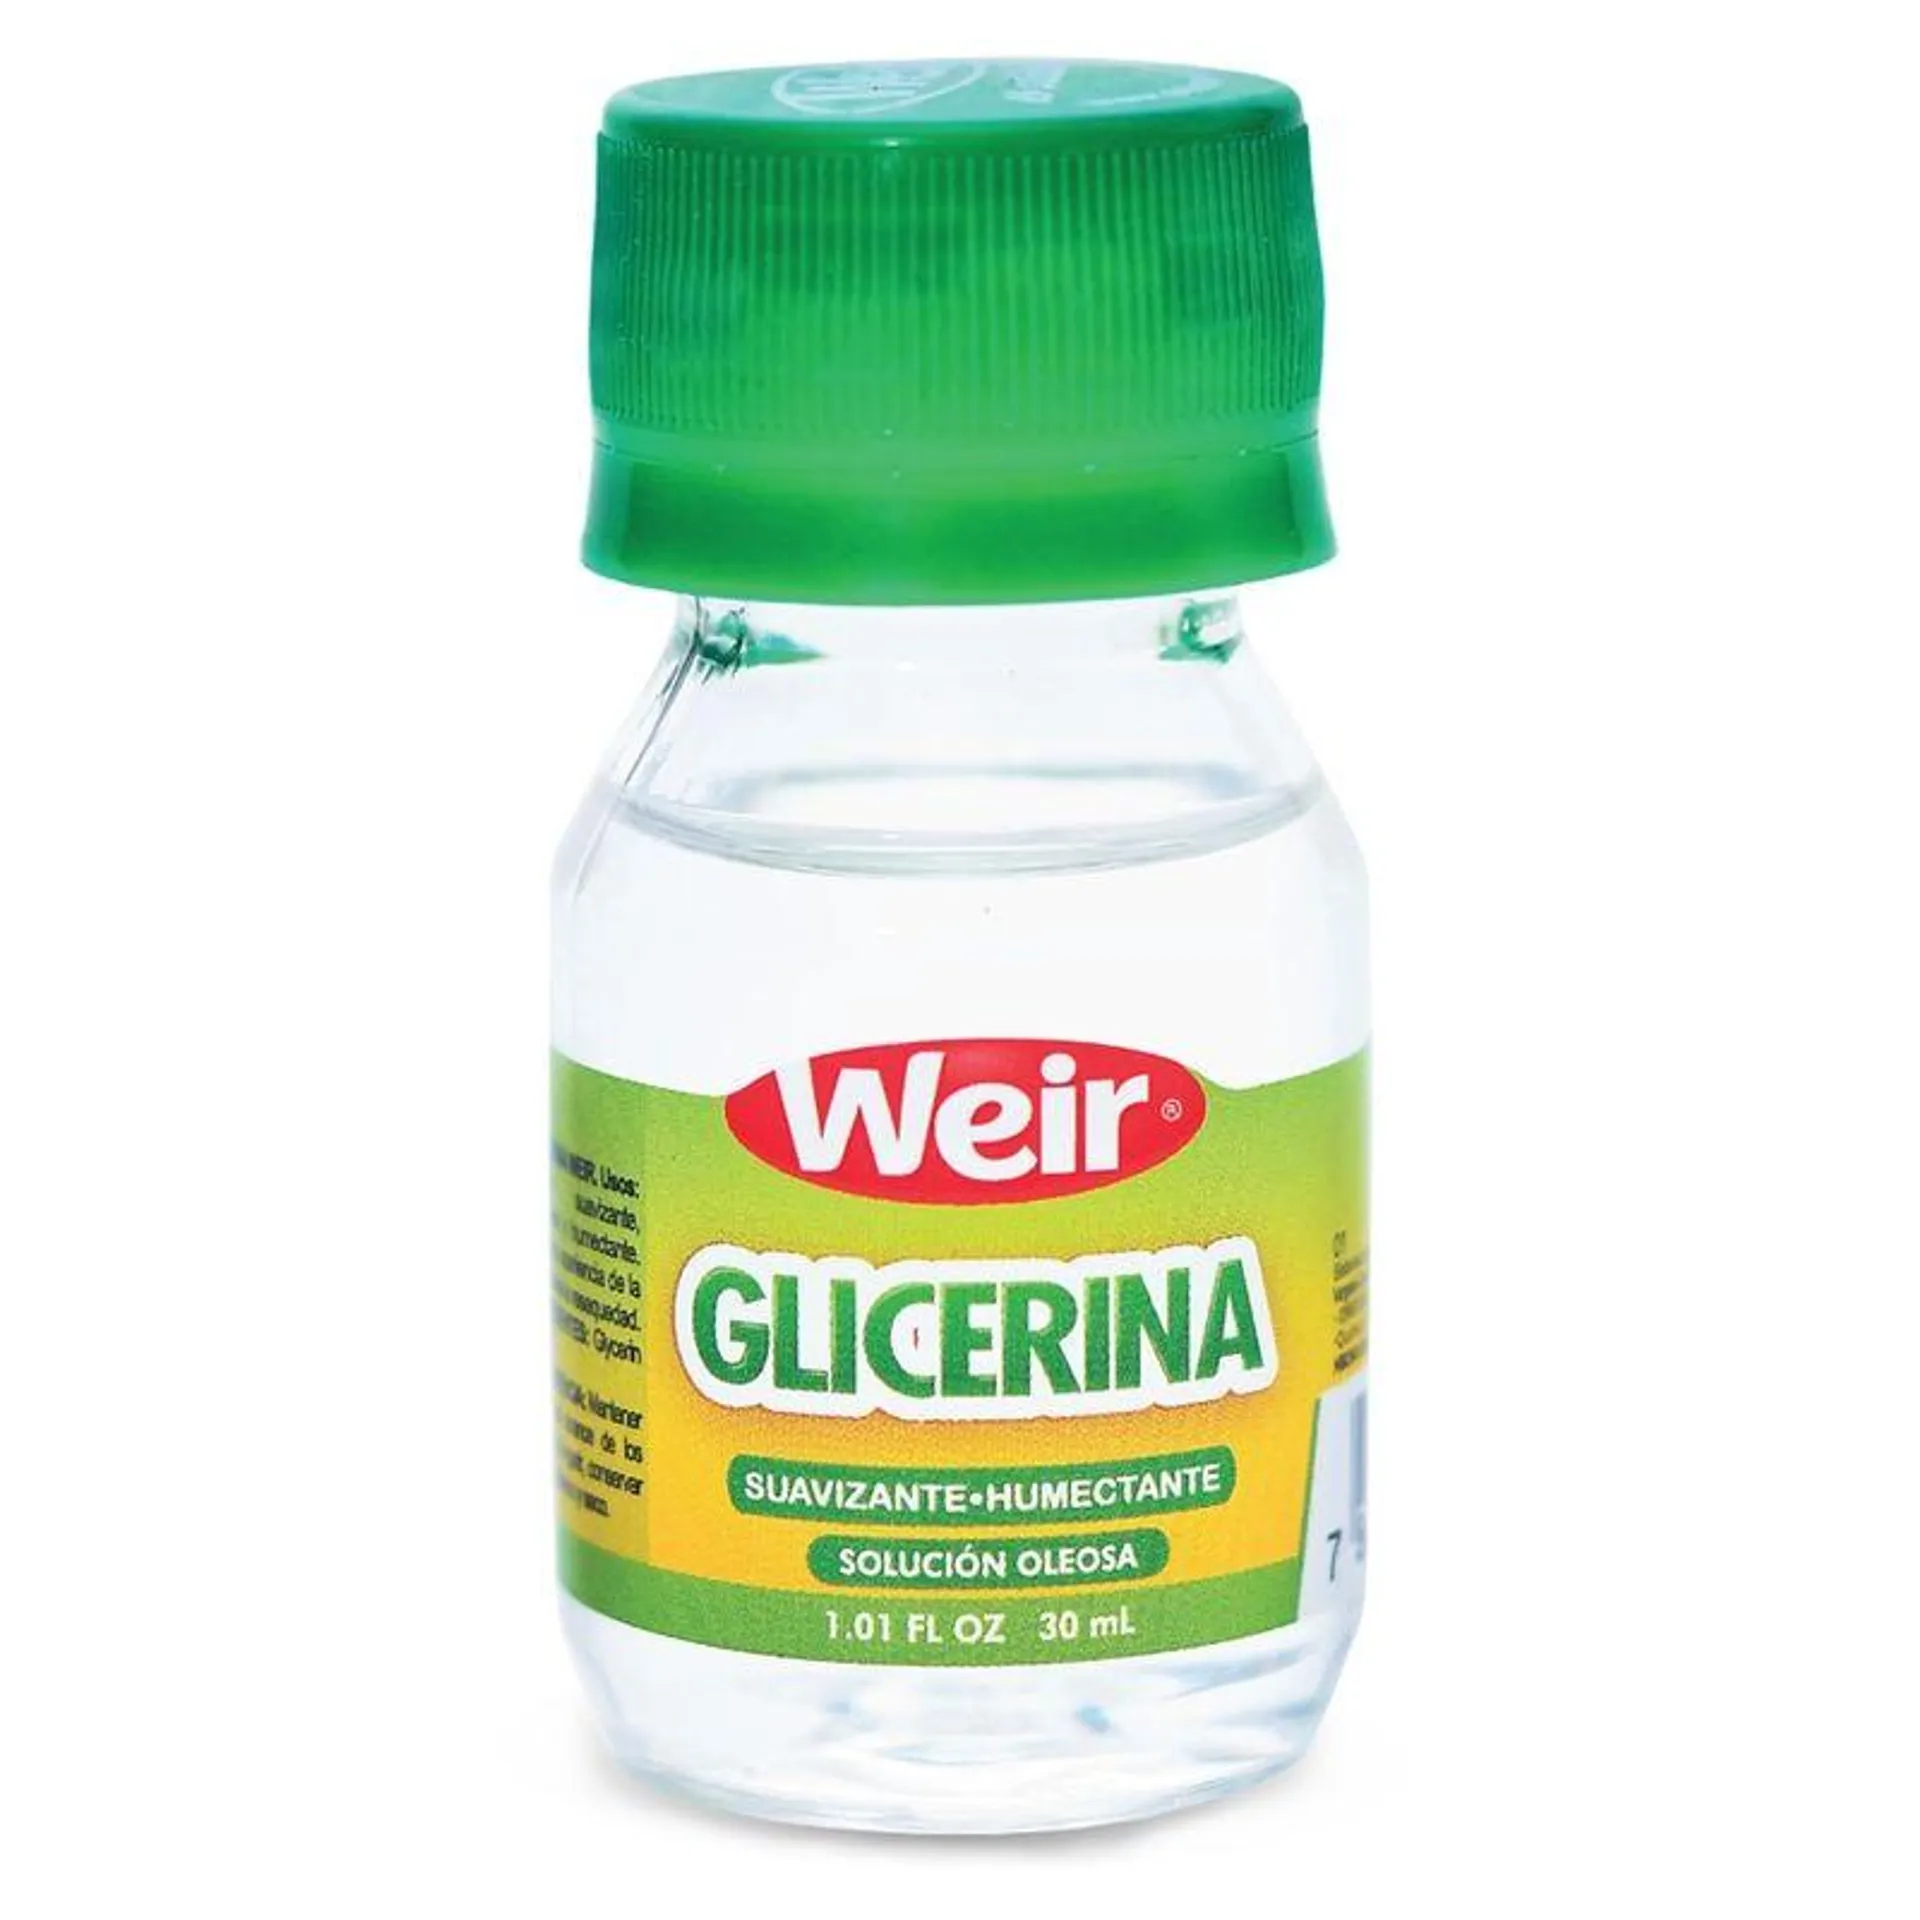 Weir Glicerina